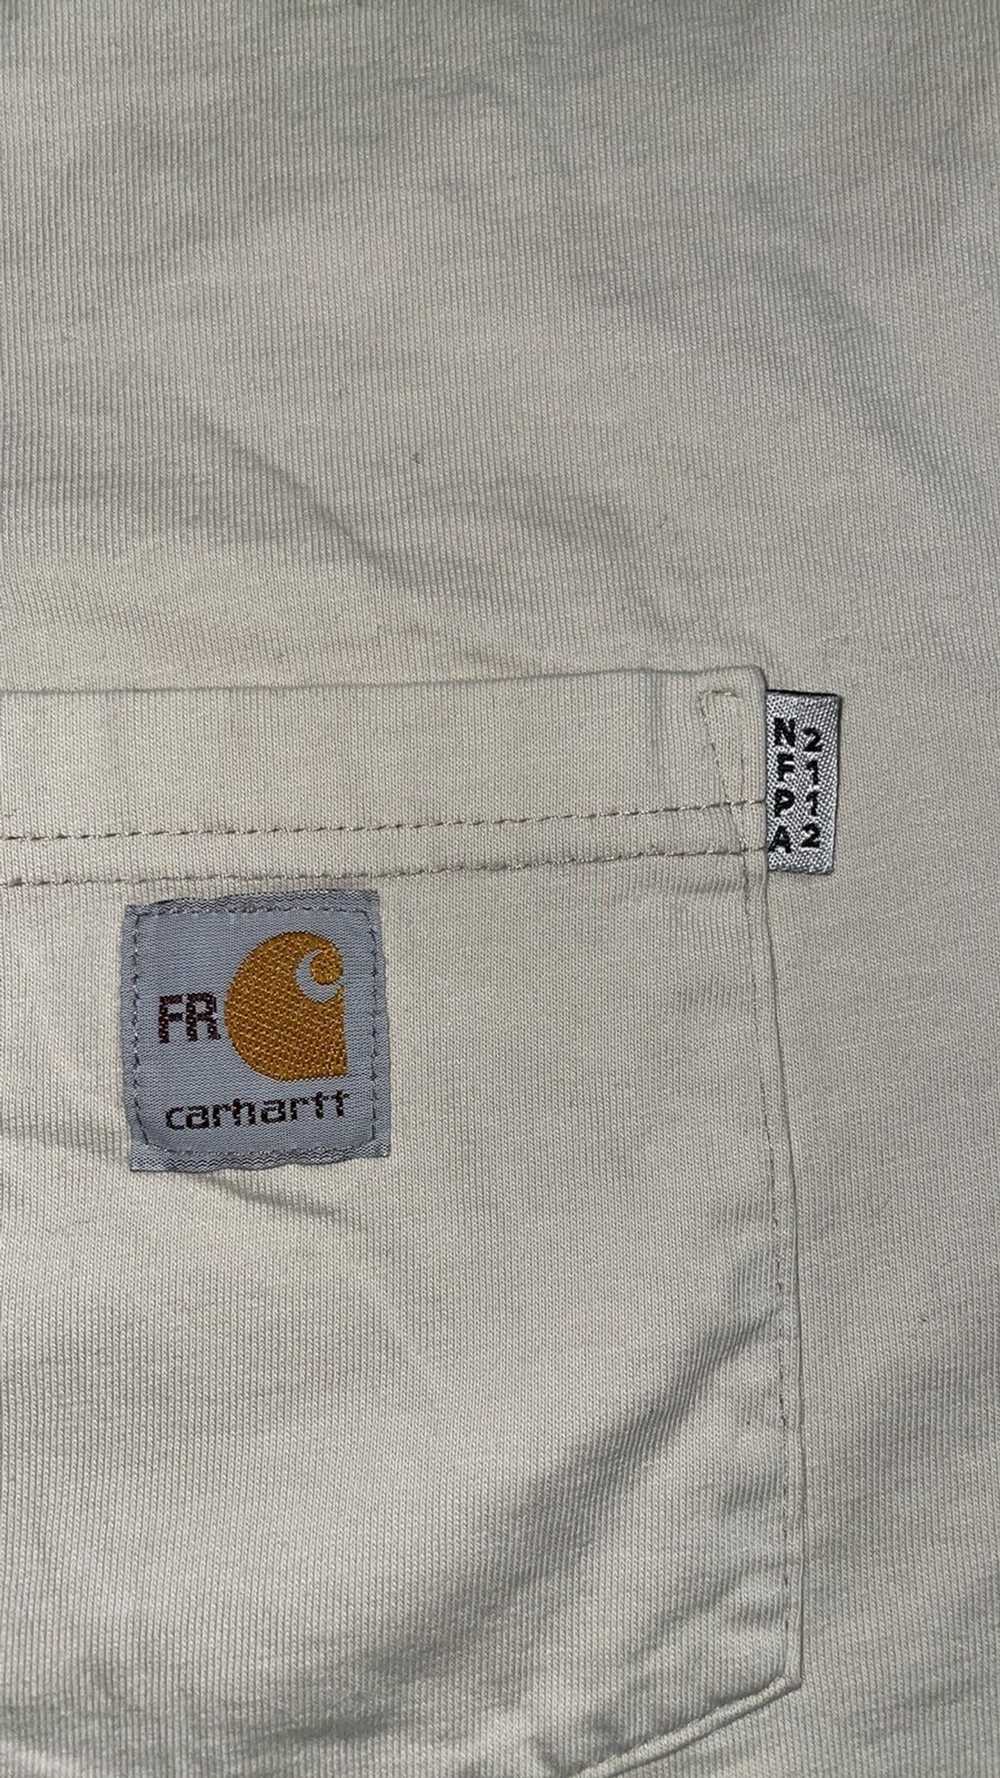 Carhartt Carhartt flame resistant garment - image 5